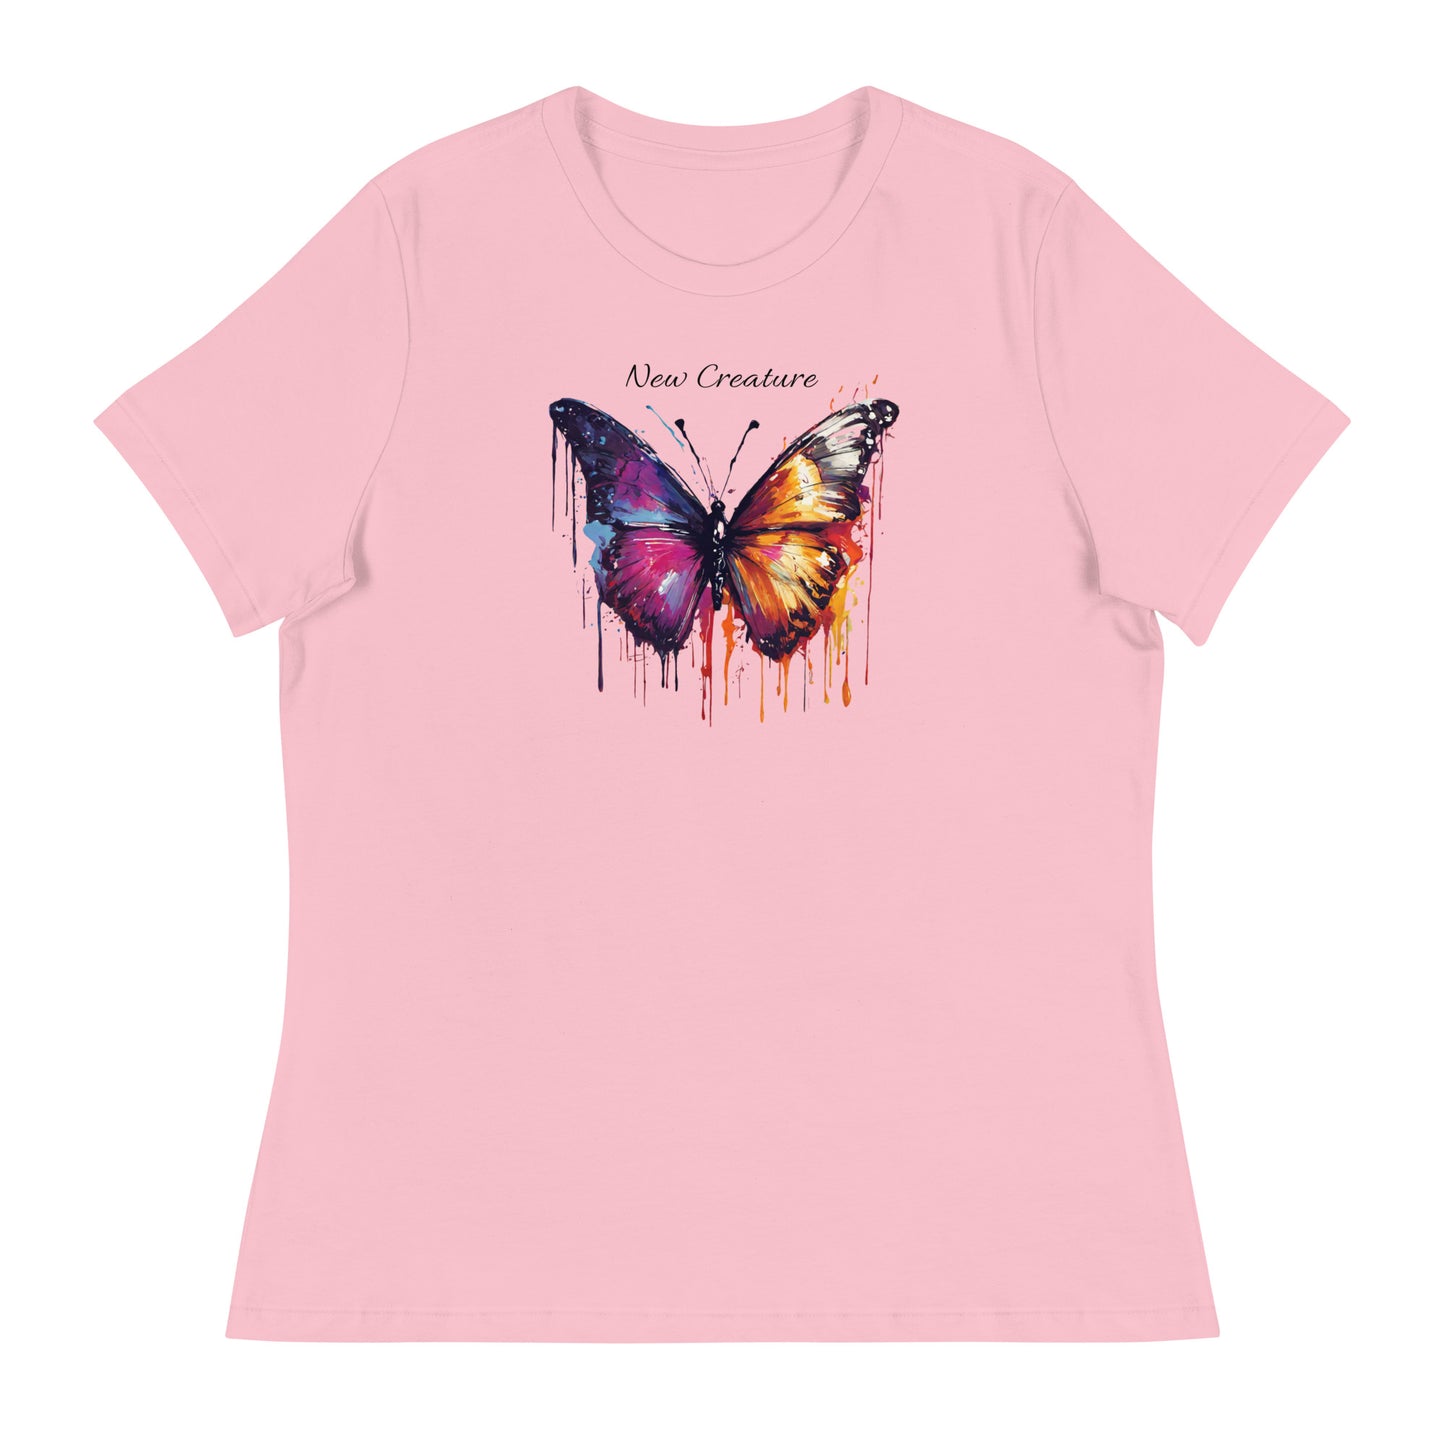 New Creature Christian Women's Beautiful Graphic T-Shirt Pink